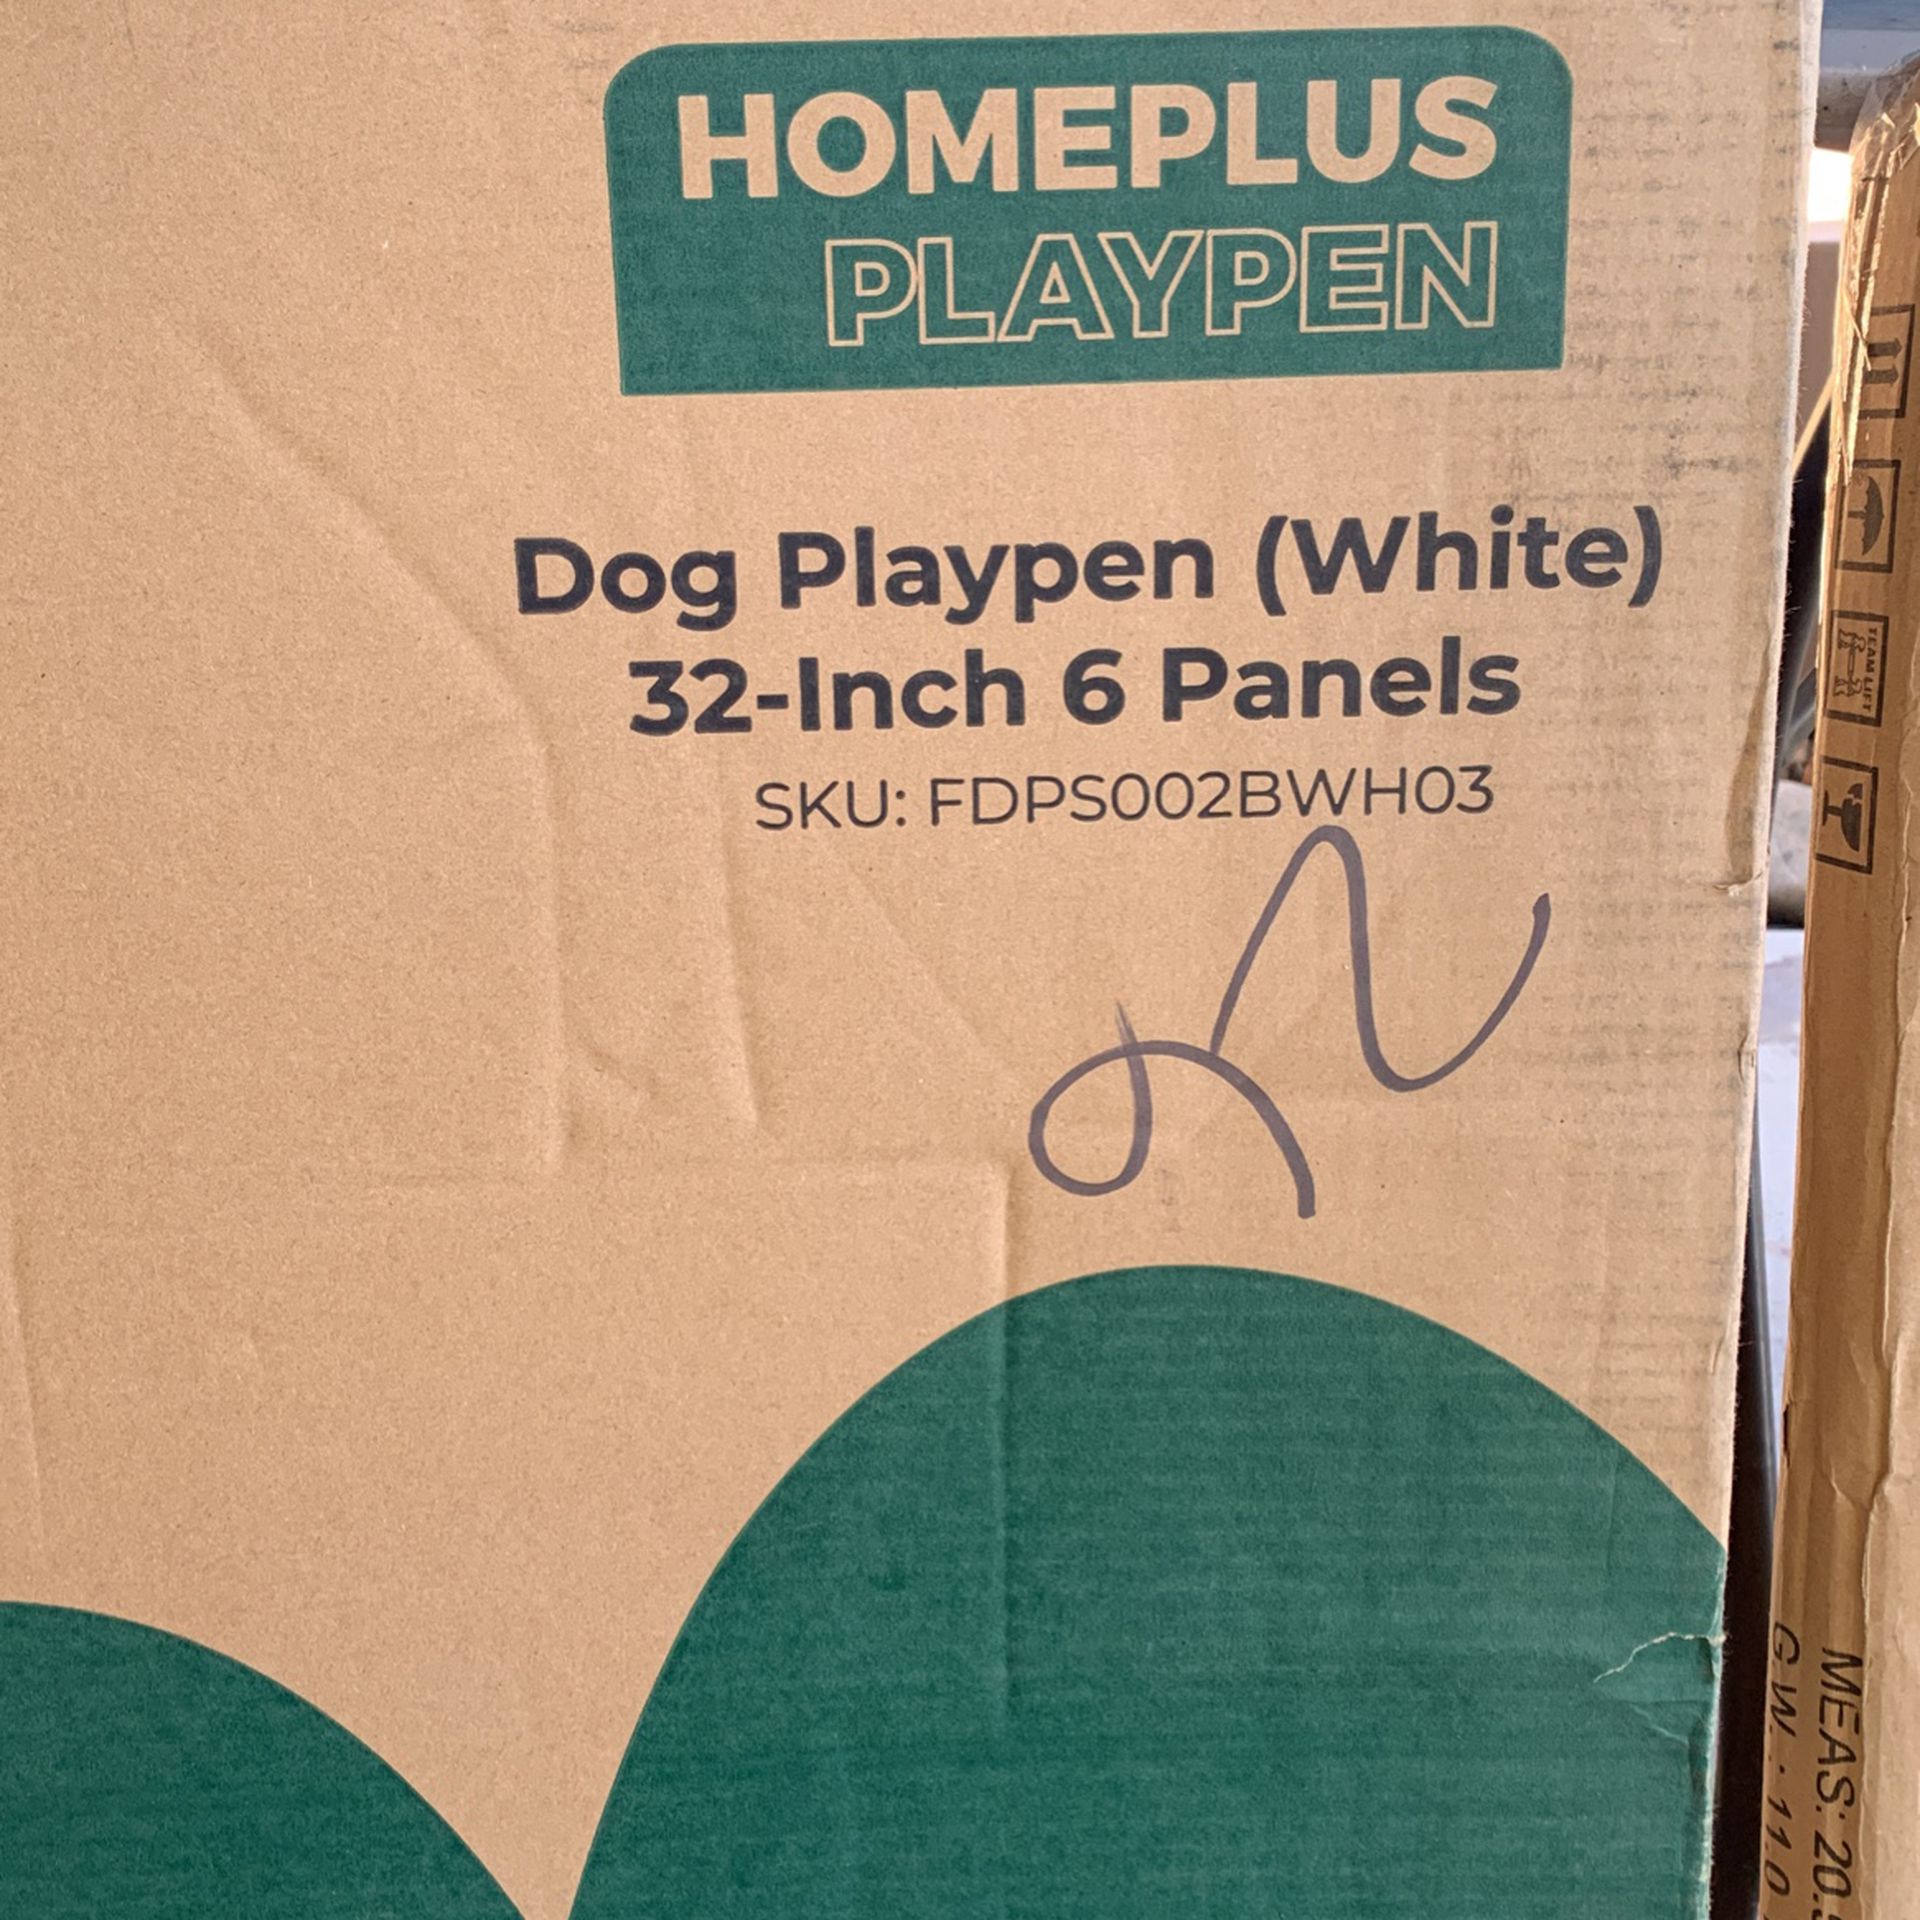 Dog Playpen 32-inch 6panels